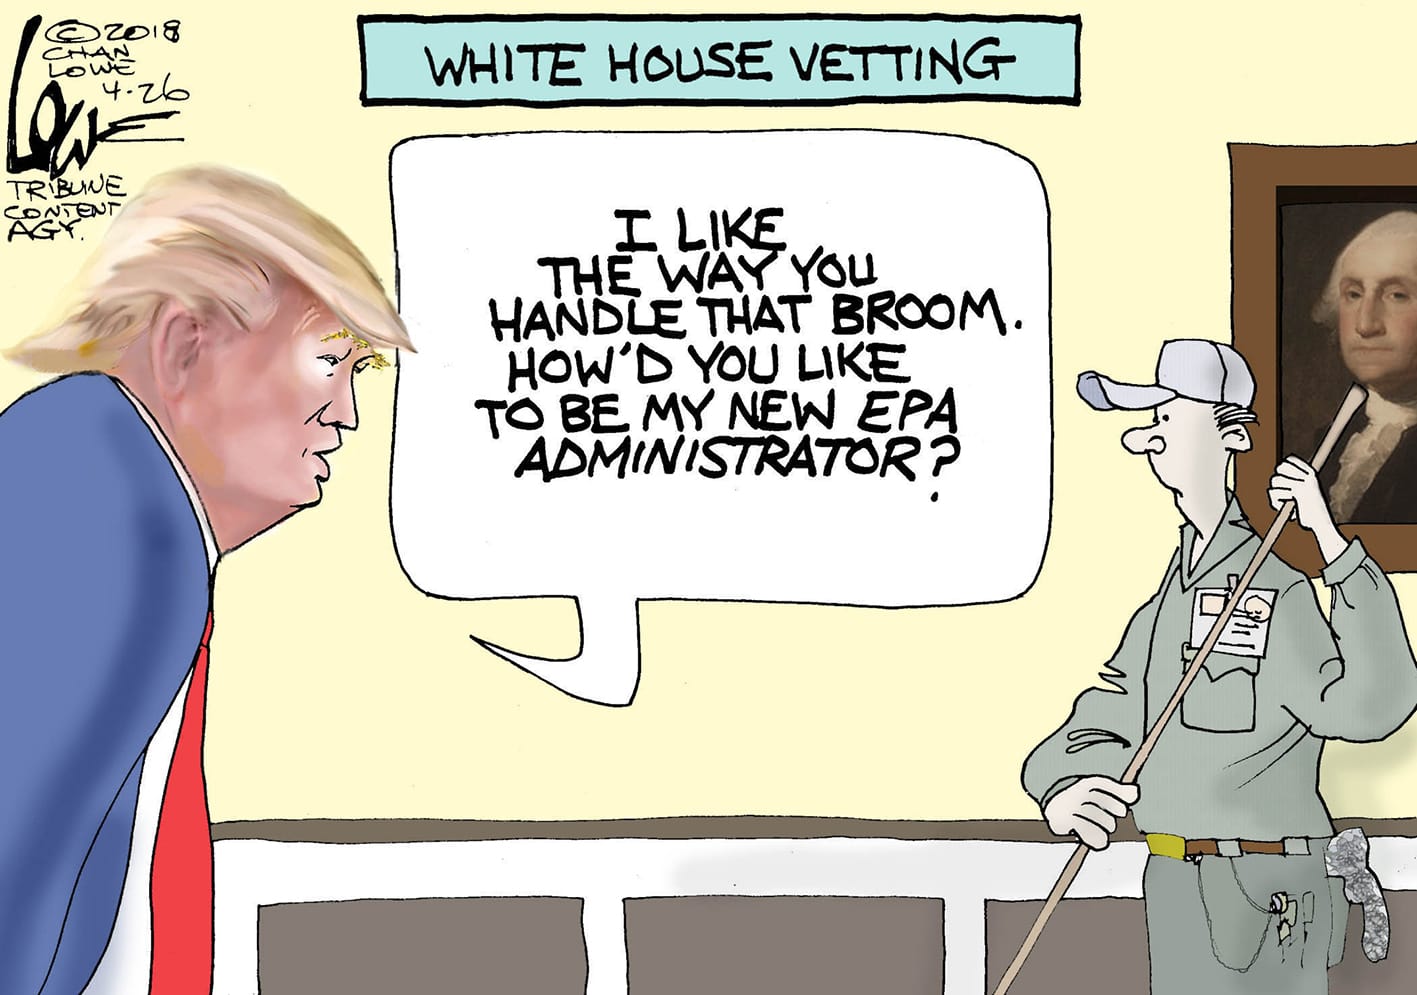 April 28: White House Vetting